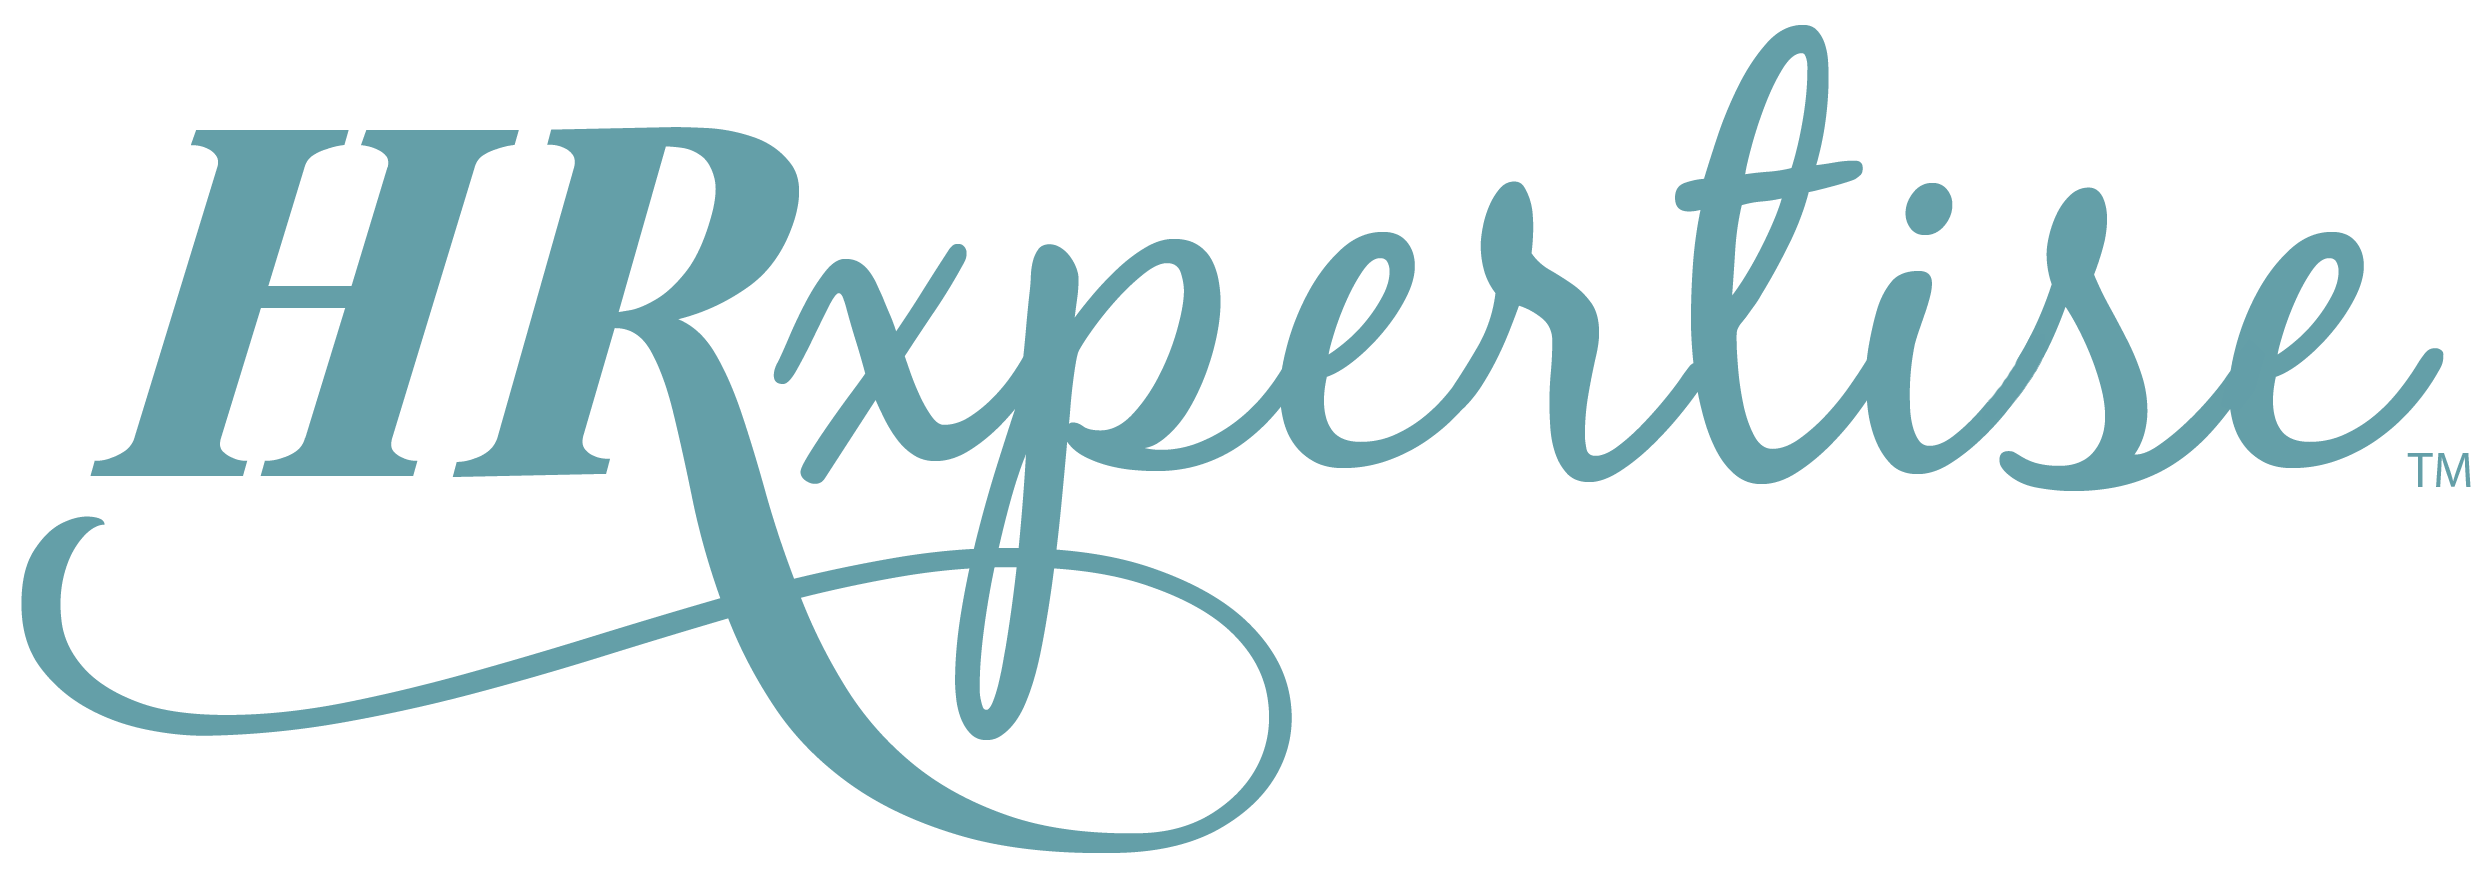 HRXpertise - HR Experts - Atlanta, Ga.